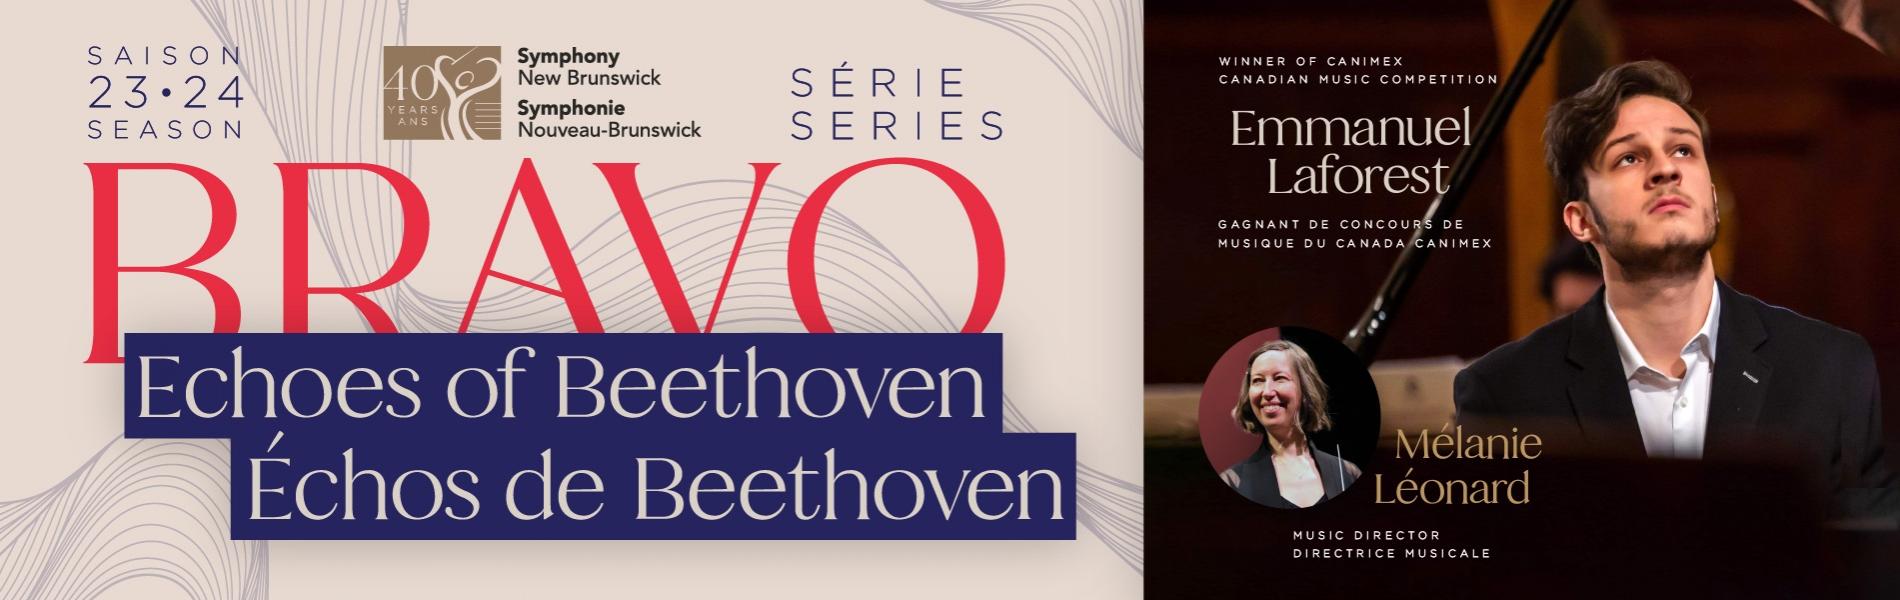 Bravo 6: Echoes of Beethoven